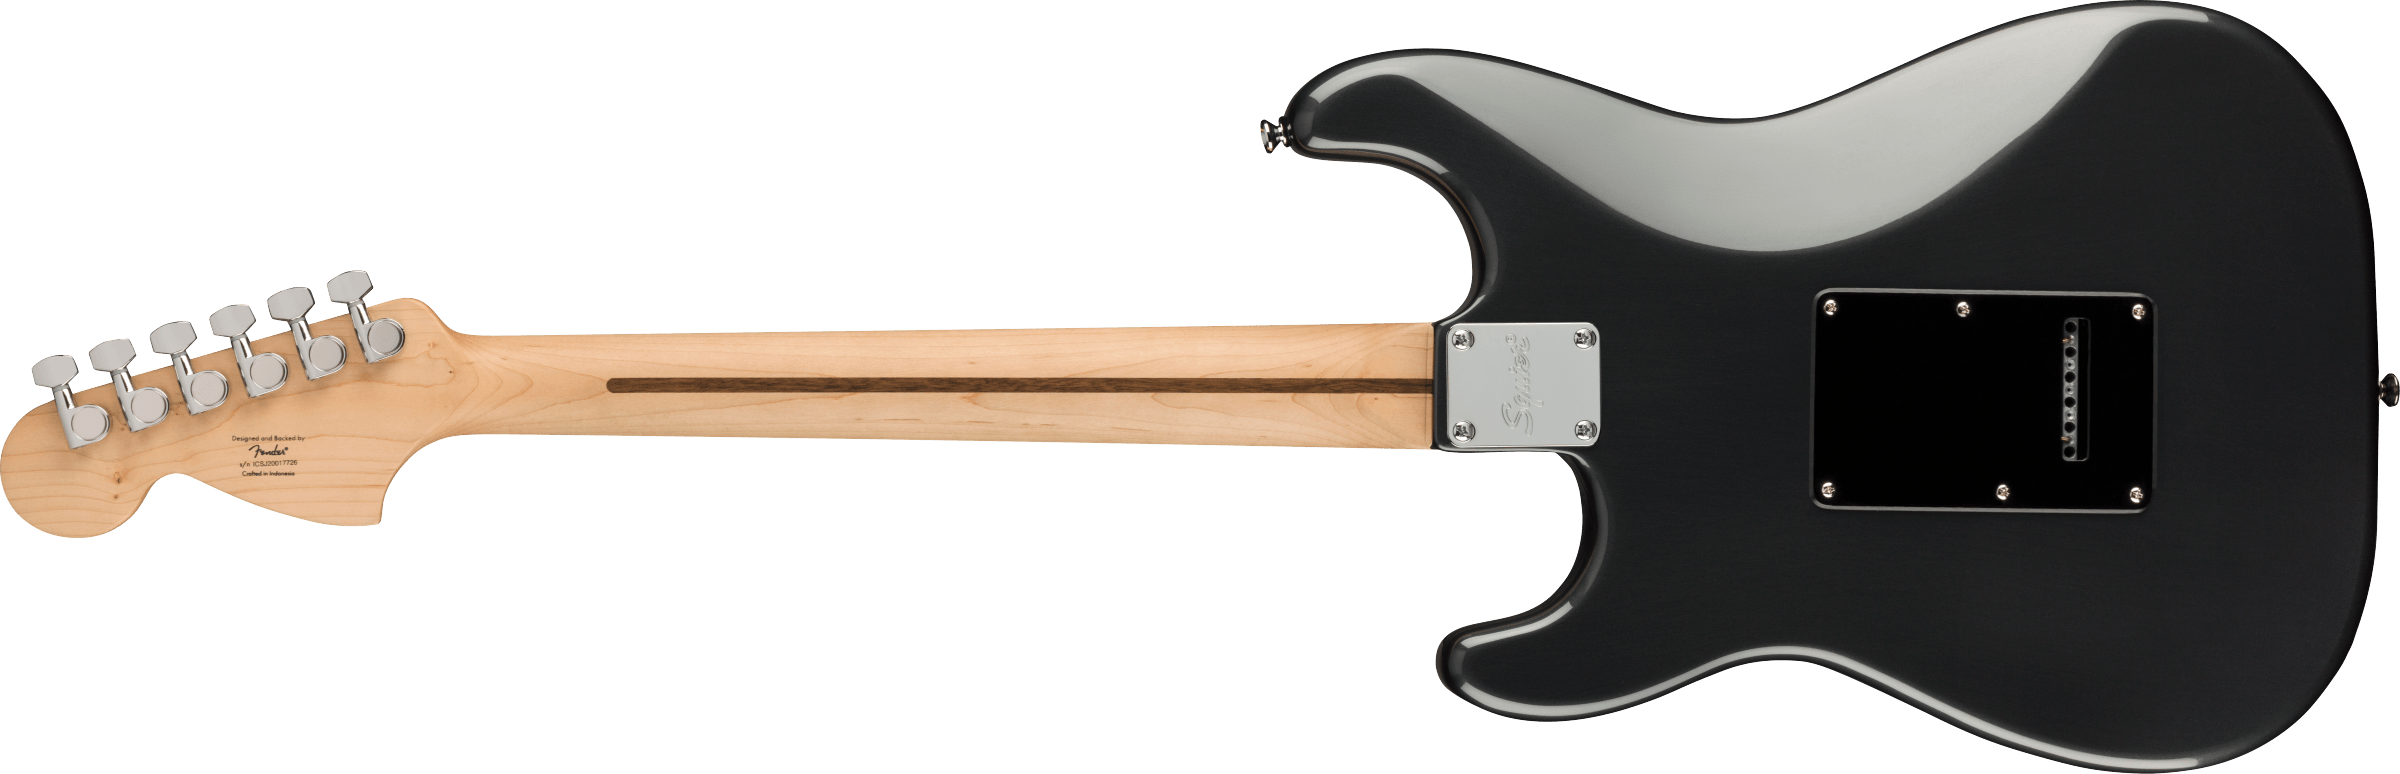 Squier Strat Affinity Hss Pack +fender Frontman 15g 2021 Trem Lau - Charcoal Frost Metallic - E-Gitarre Set - Variation 2